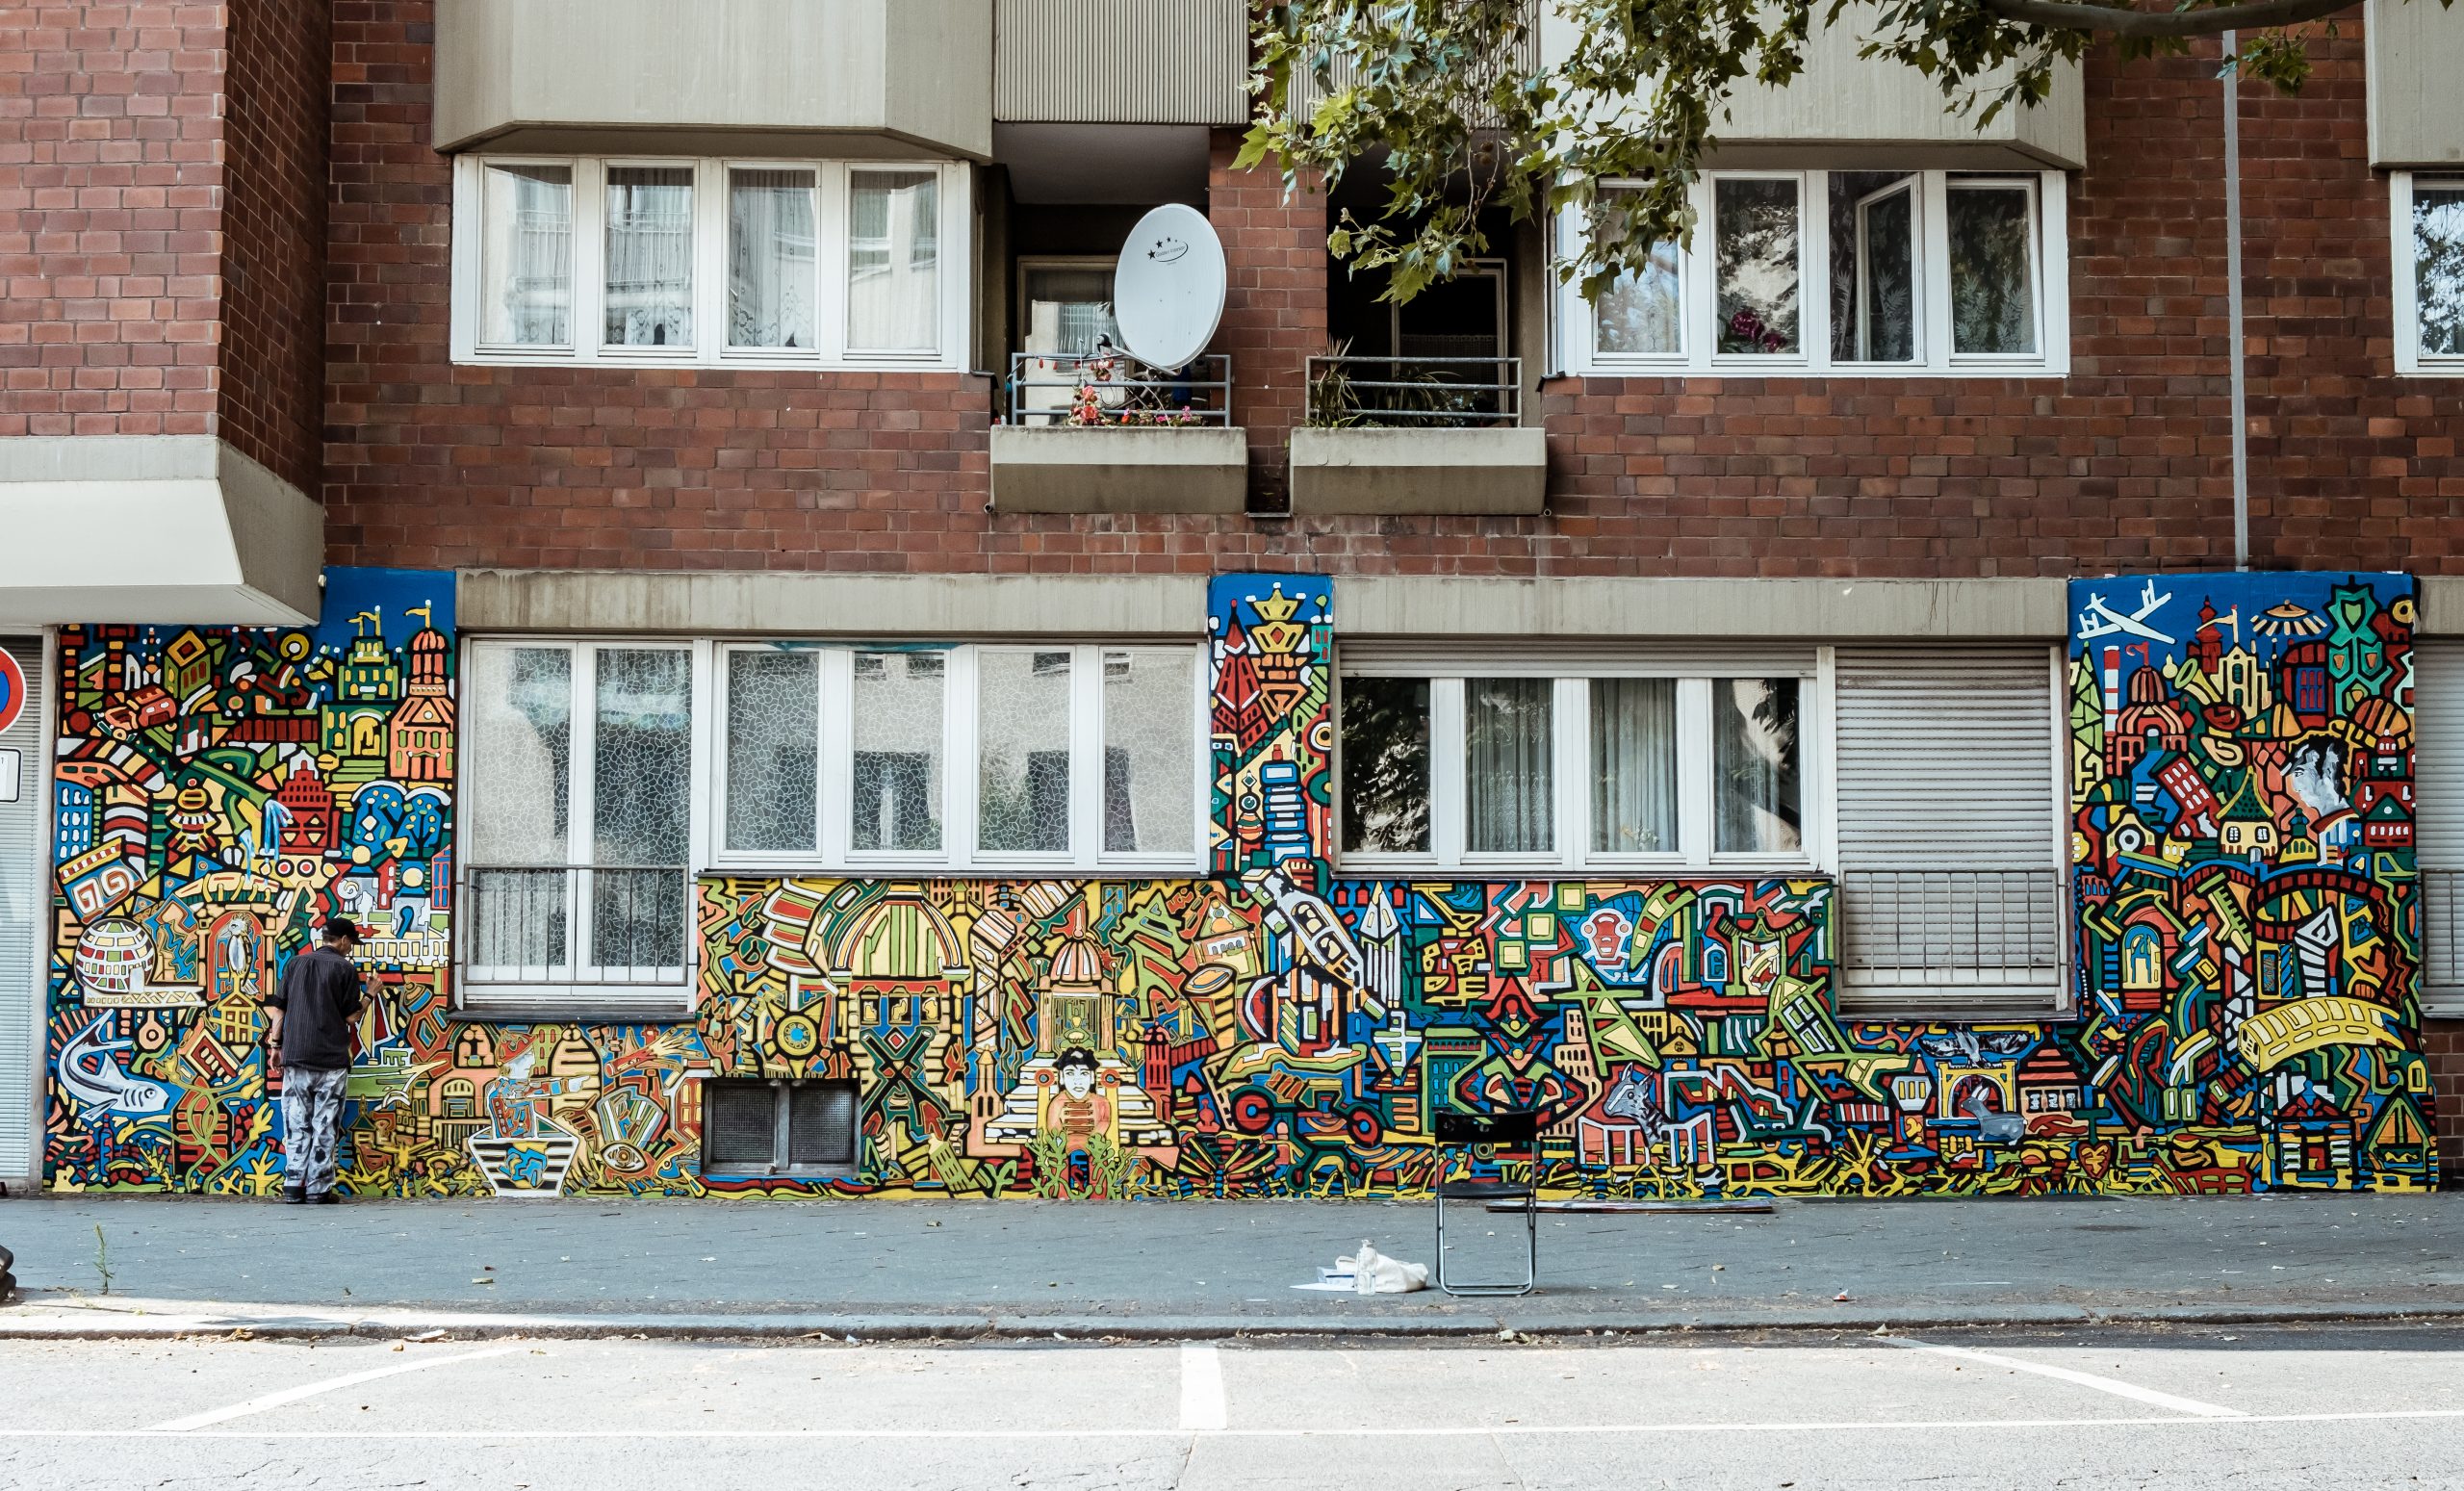 YAP_Community Wall_Mural_URBAN NATION_Berlin_Peter Missing_01